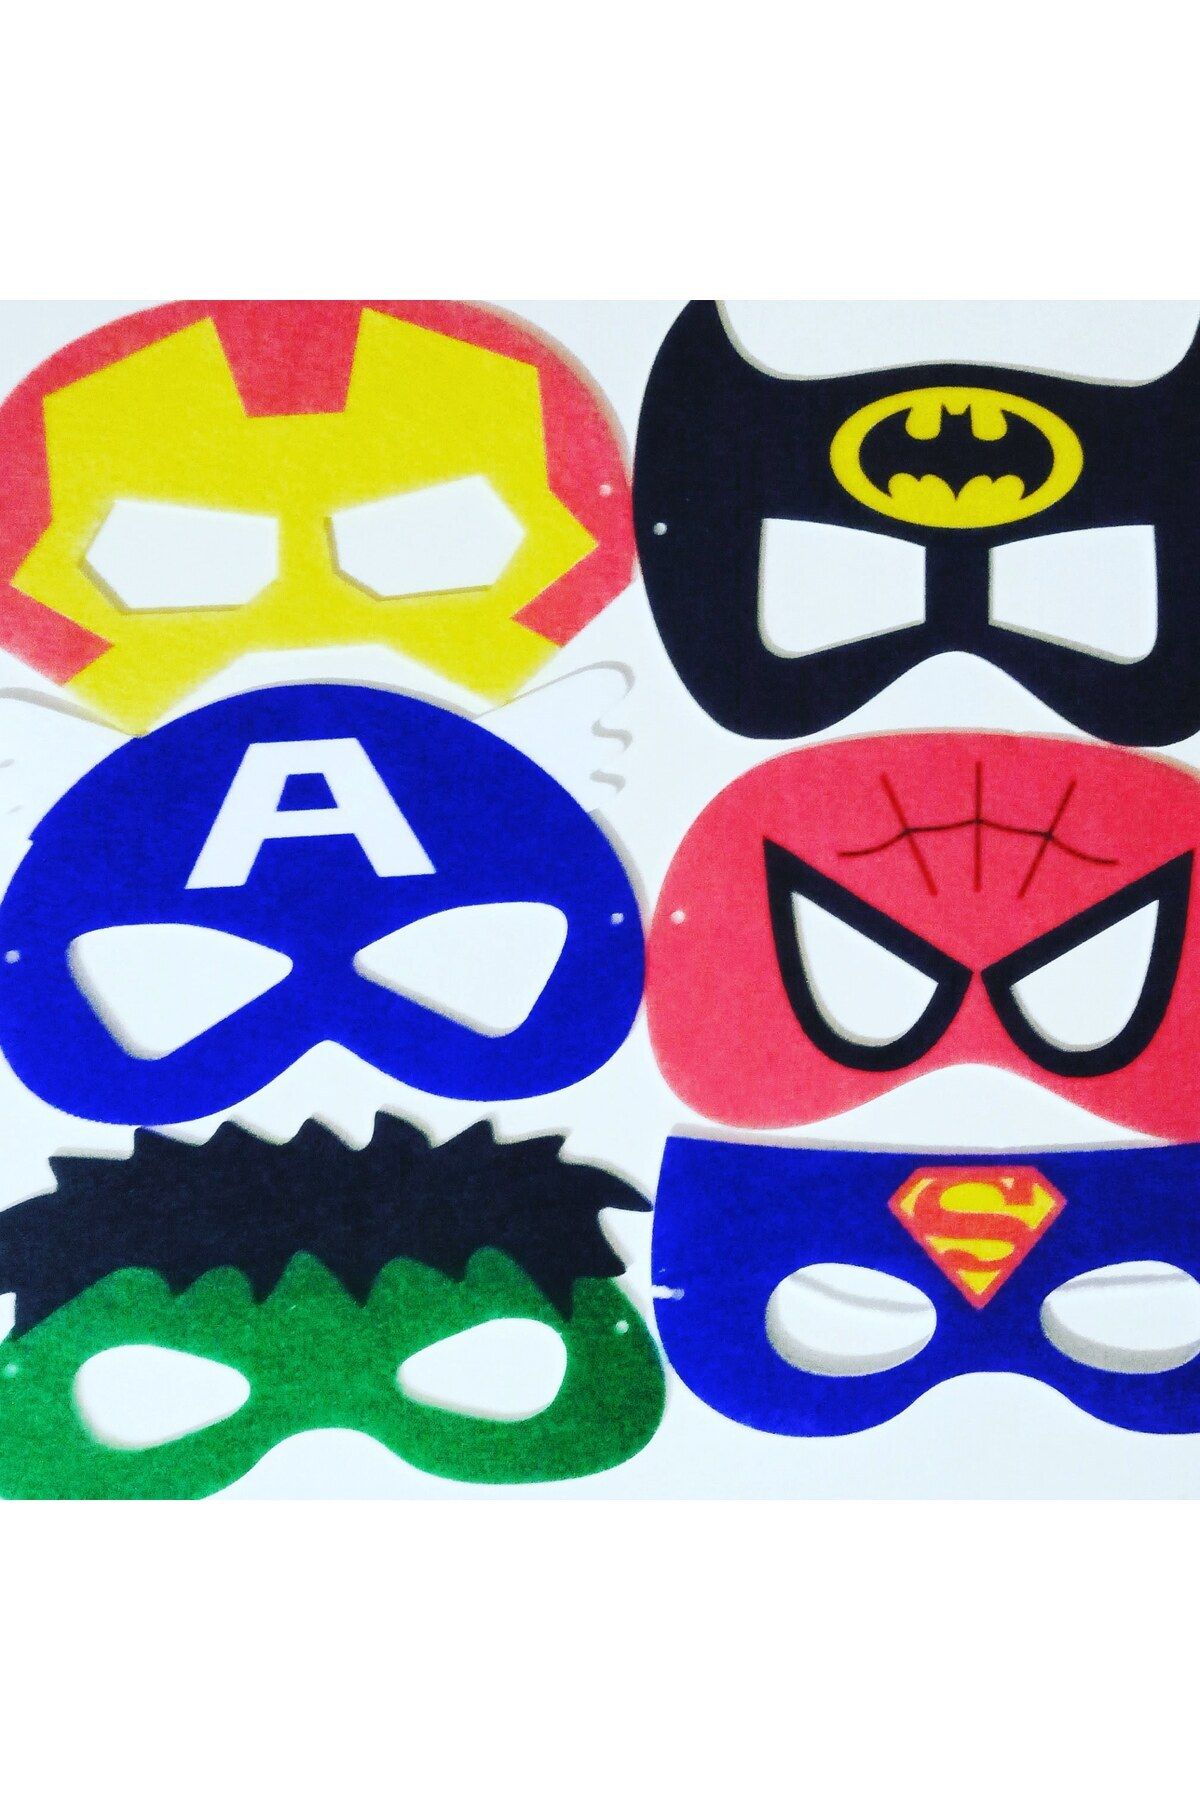 Oyuncakcii Figür Karakter Maske 6 Lı, Örümcek Adam, Batman, Hulk, Superman,kaptan Amerika, Demir Adam